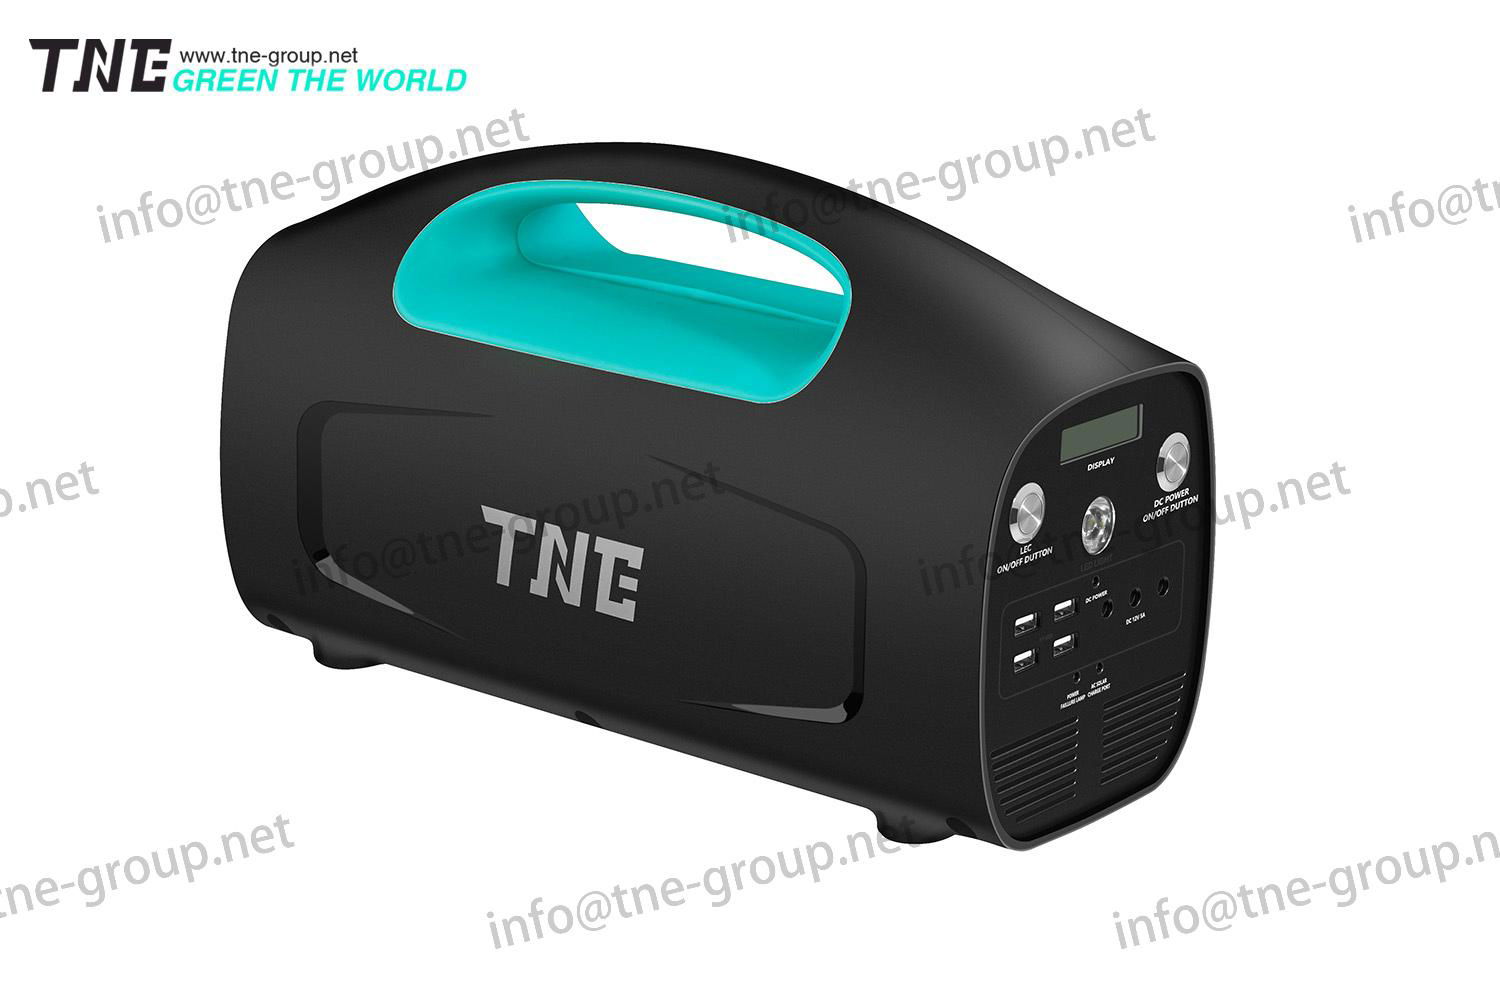 TNE solar online home inverter ups portable generator power bank 2